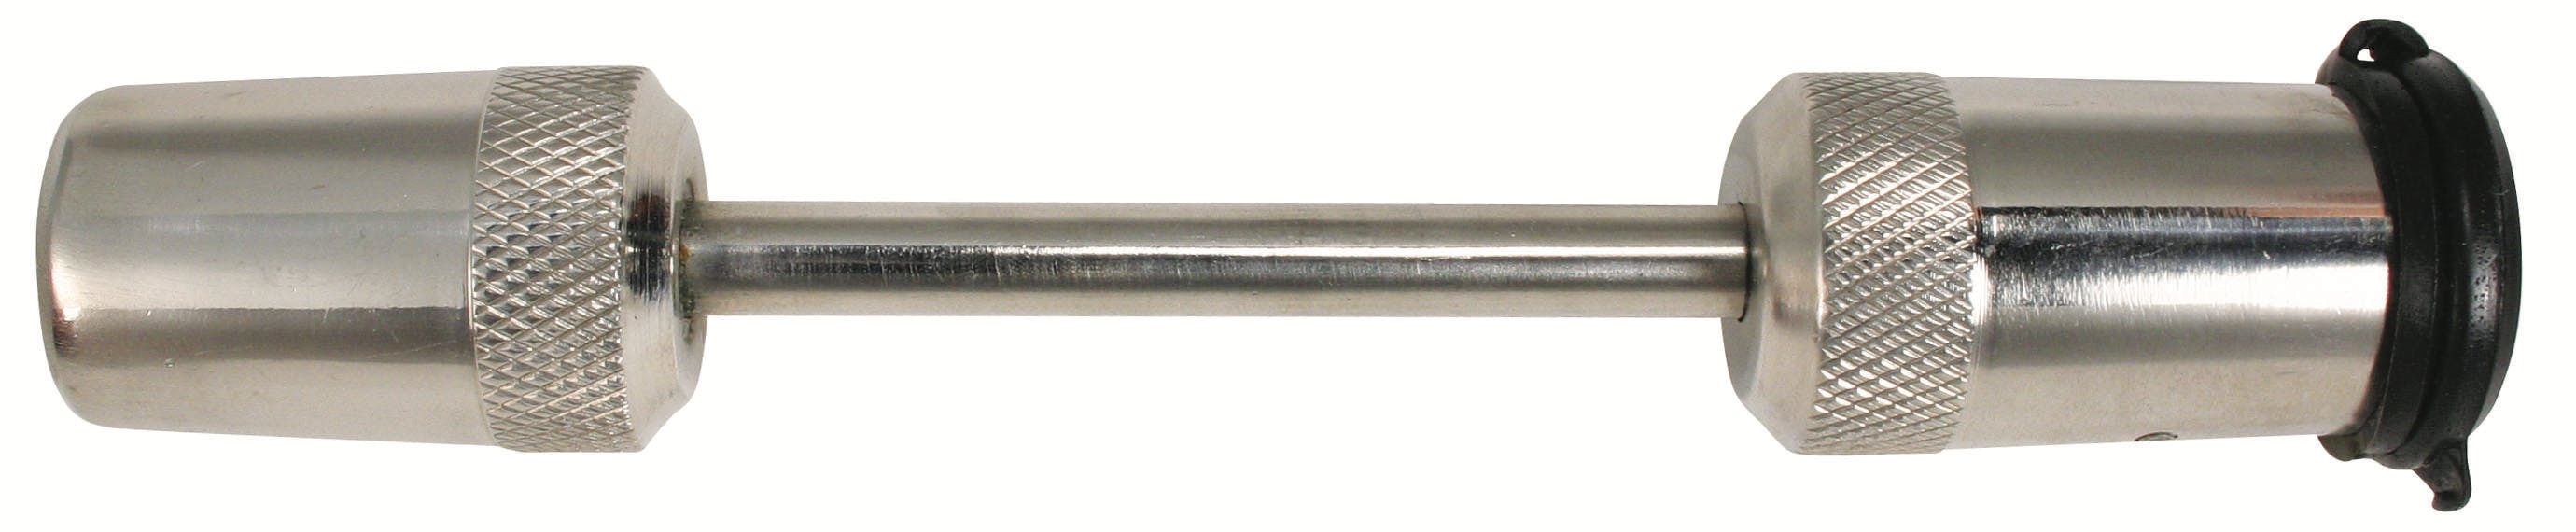 TRIMAX SXTC2 Premium Stainless Steel Coupler Lock (2 1/2 inch Span)